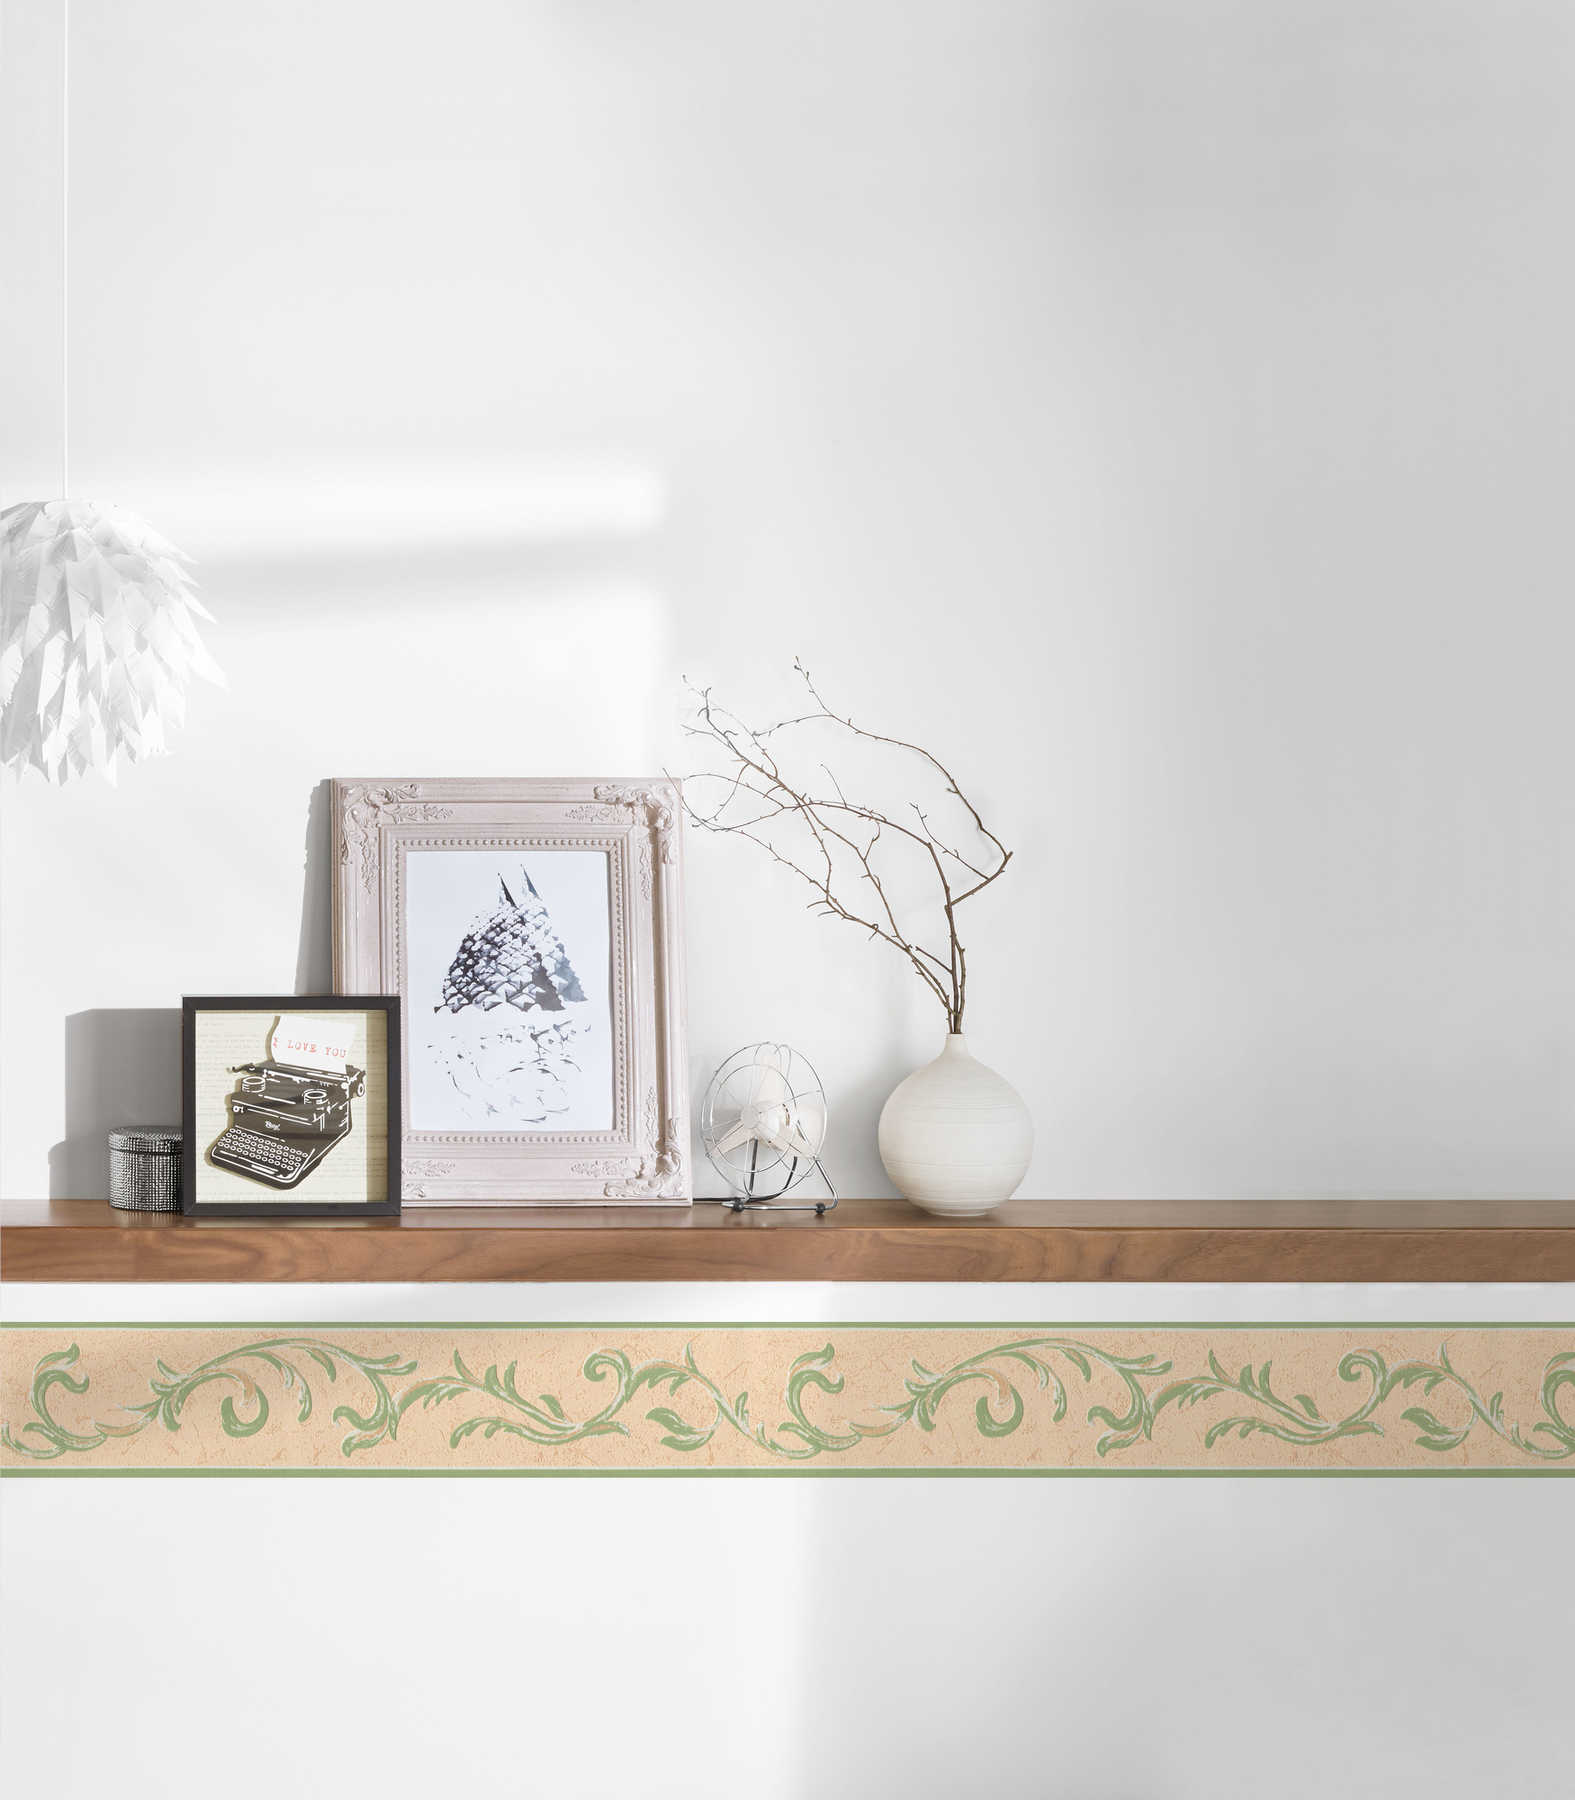             Tapetenbordüre mit floraler Ornament & Putzoptik – Beige, Grün
        